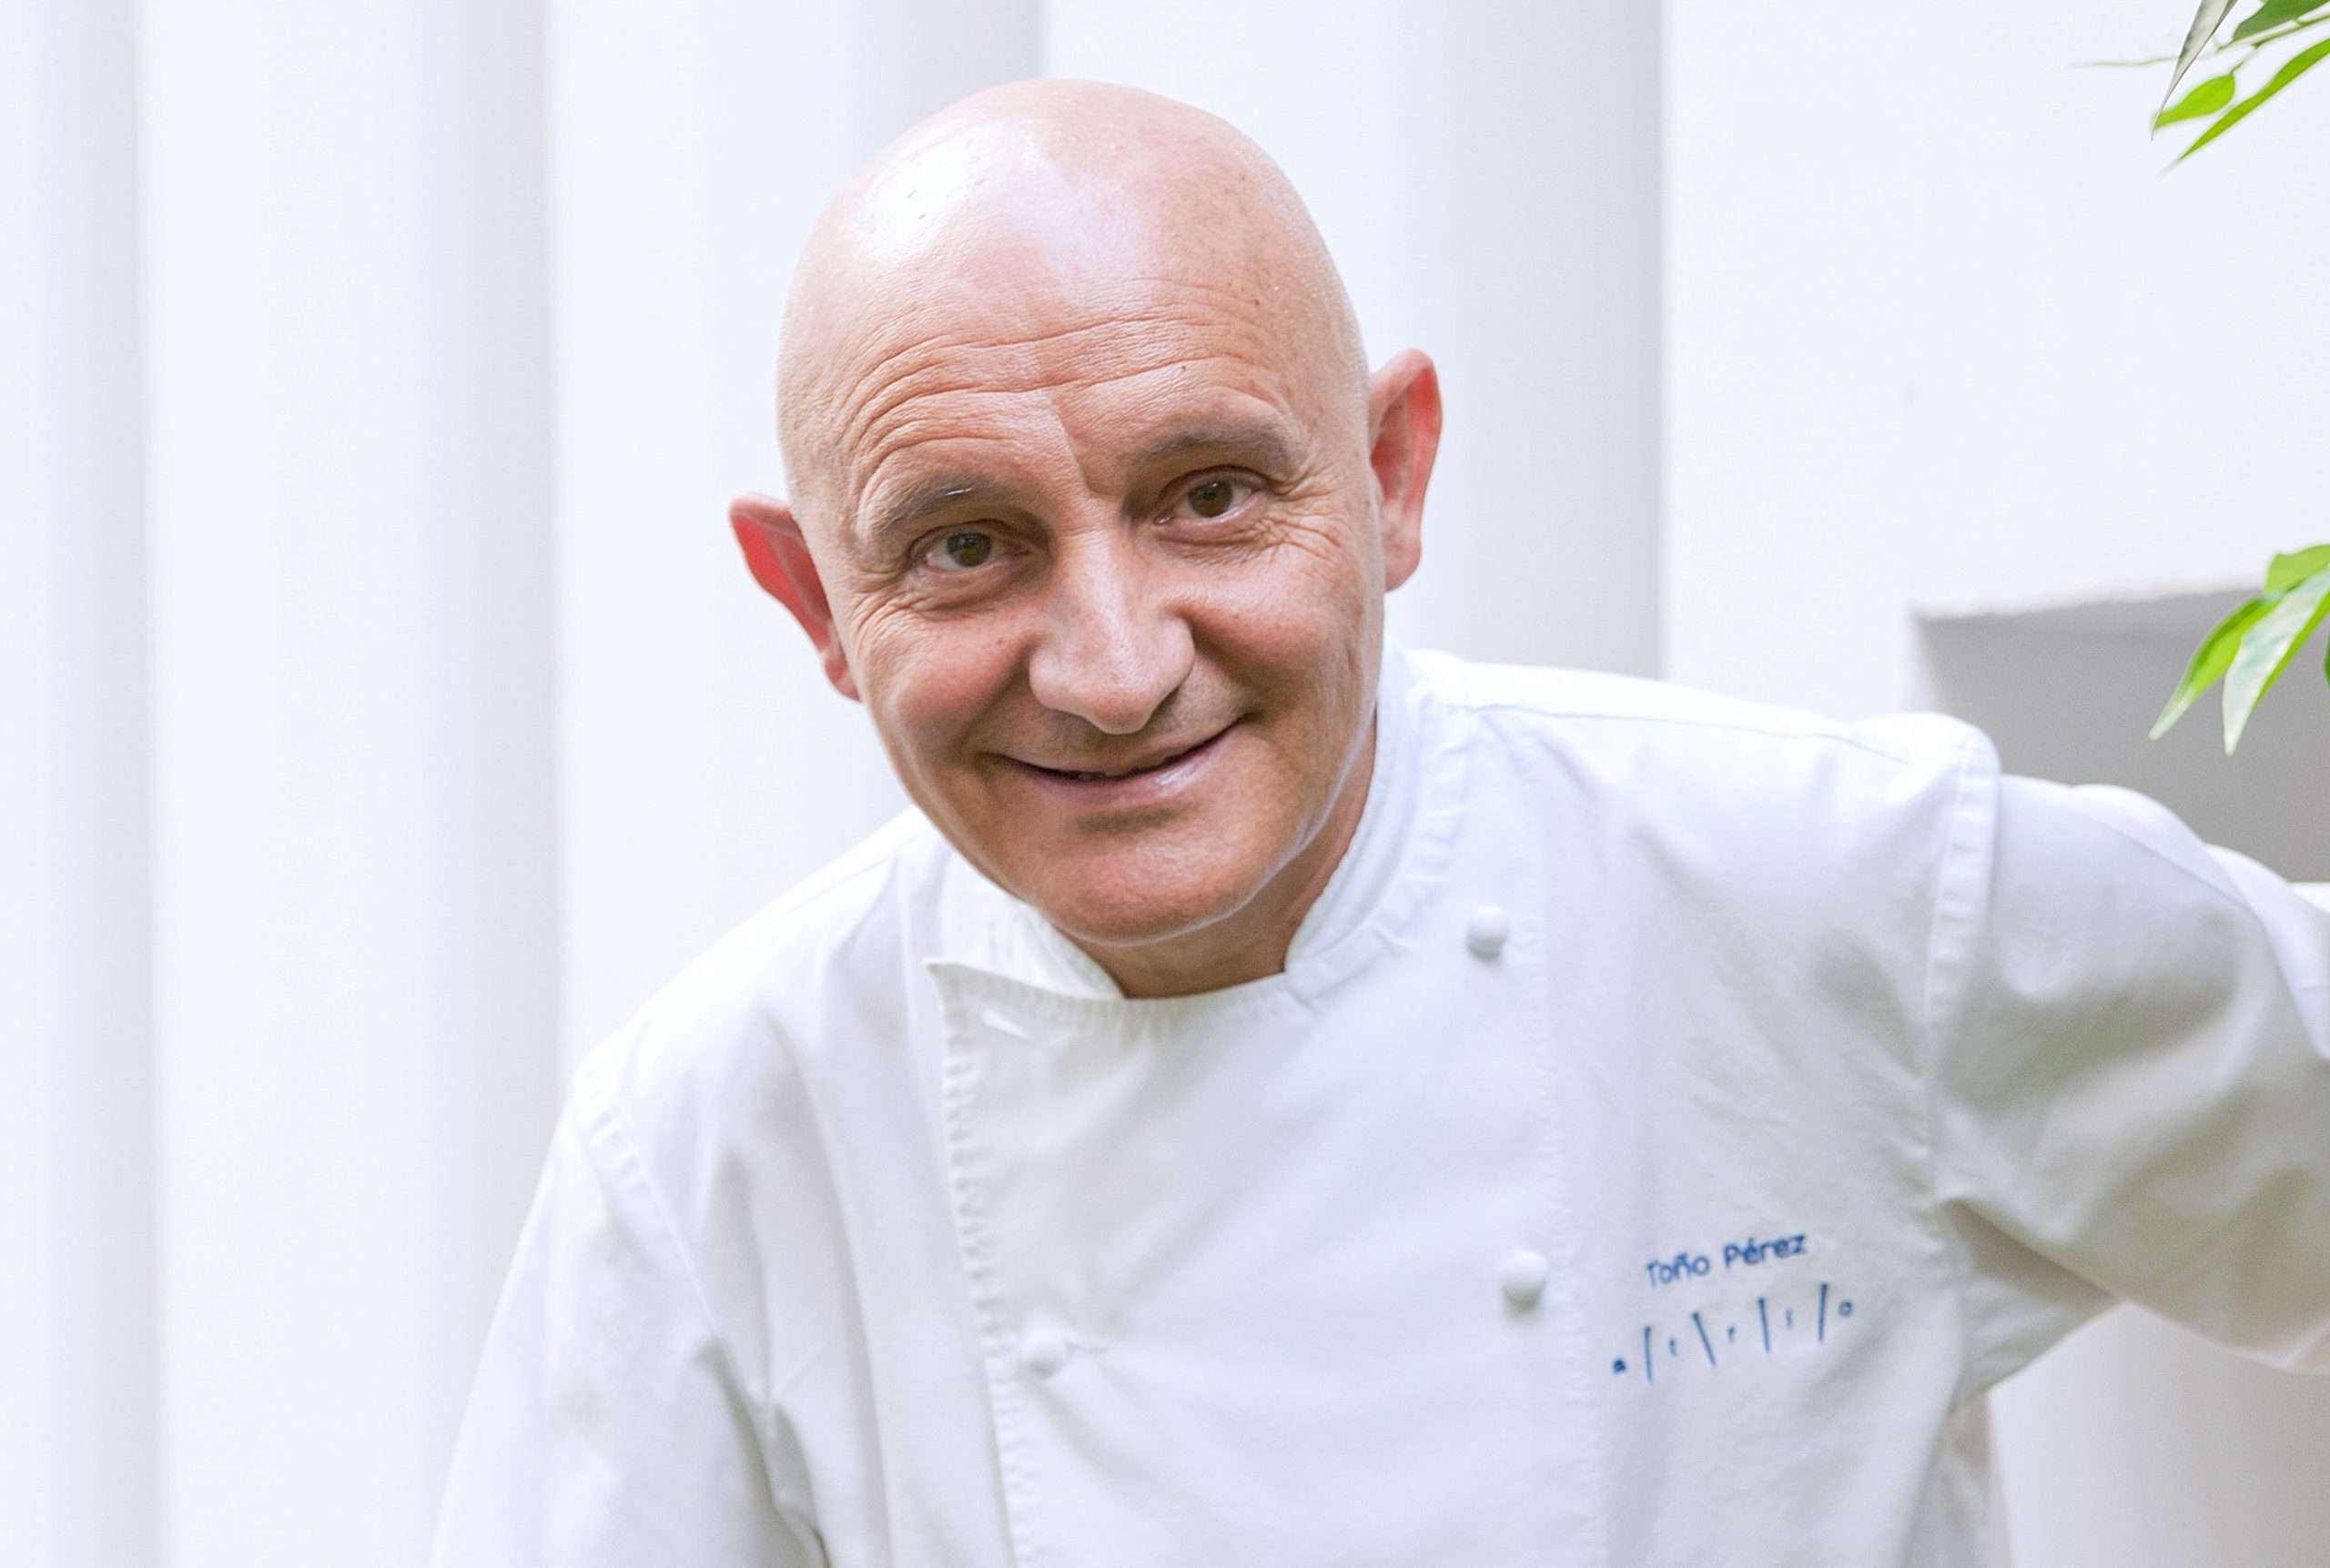 El chef Toño Pérez recibe el Premio a la Excelencia Picota del Jerte 2023